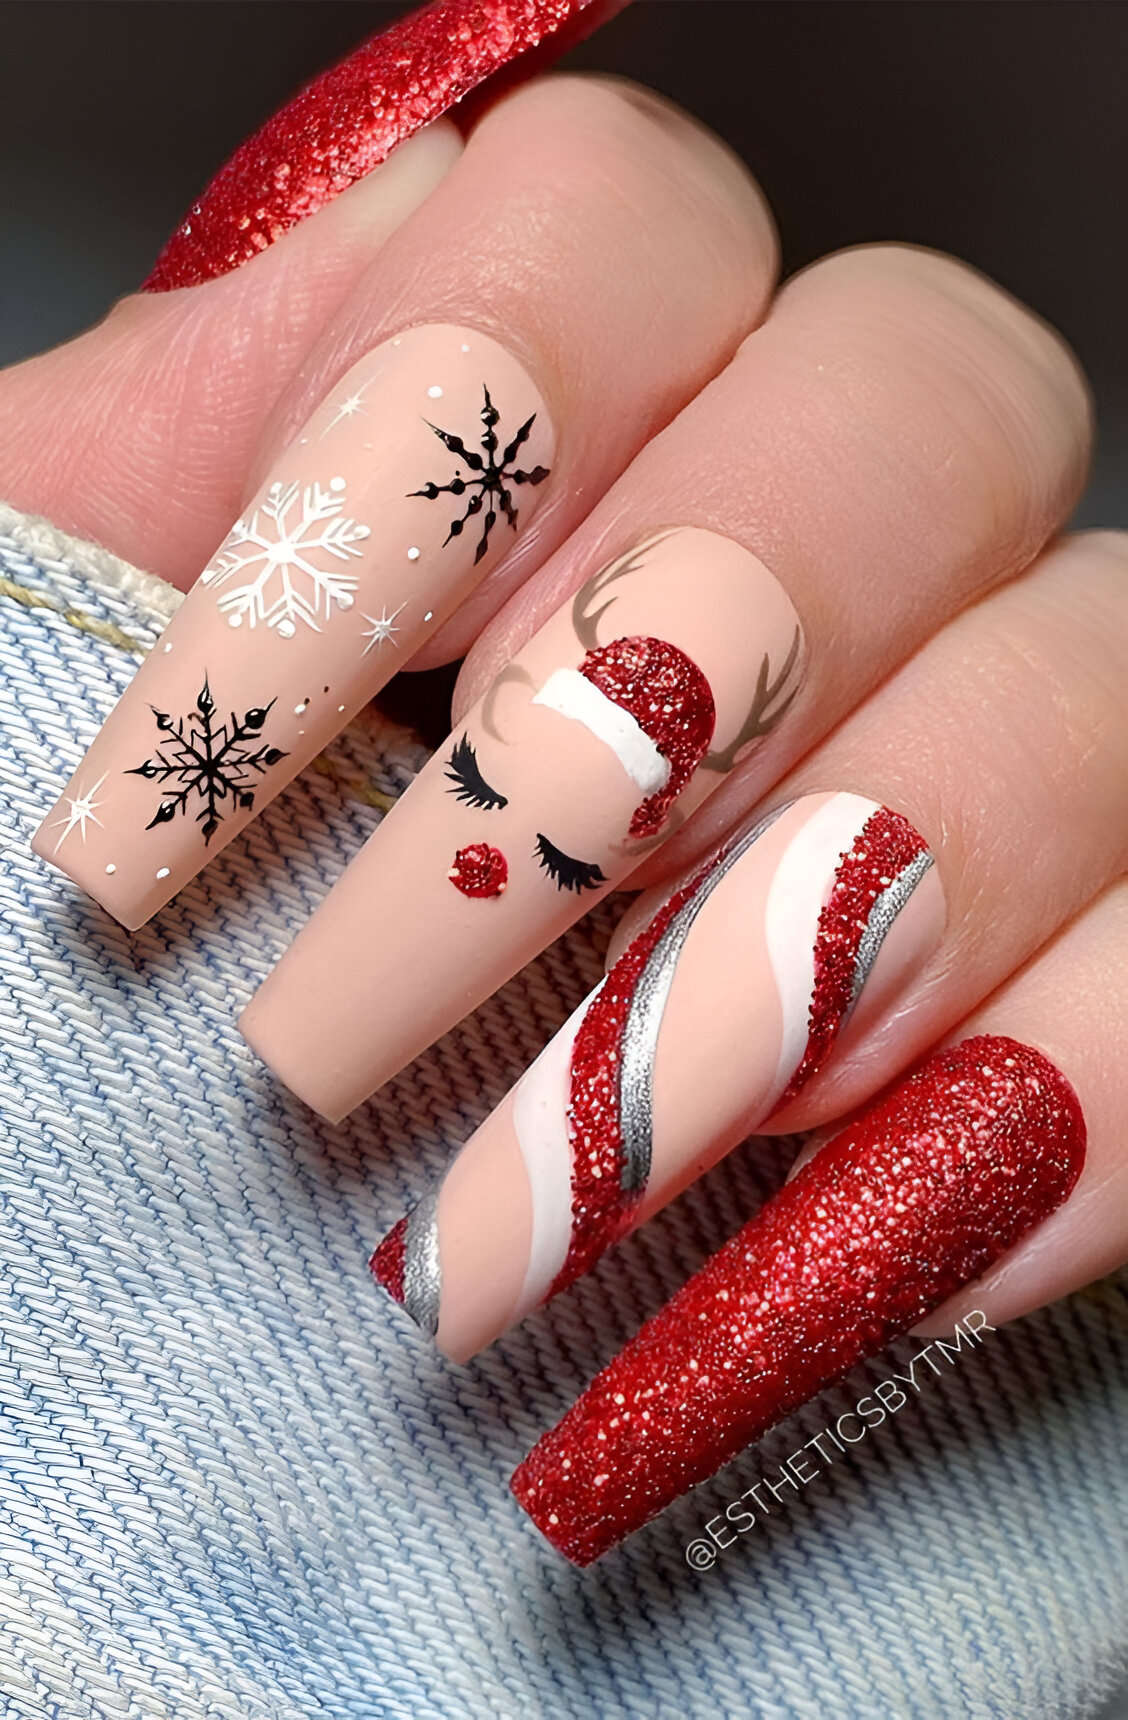 Cute Glittered Red Nails